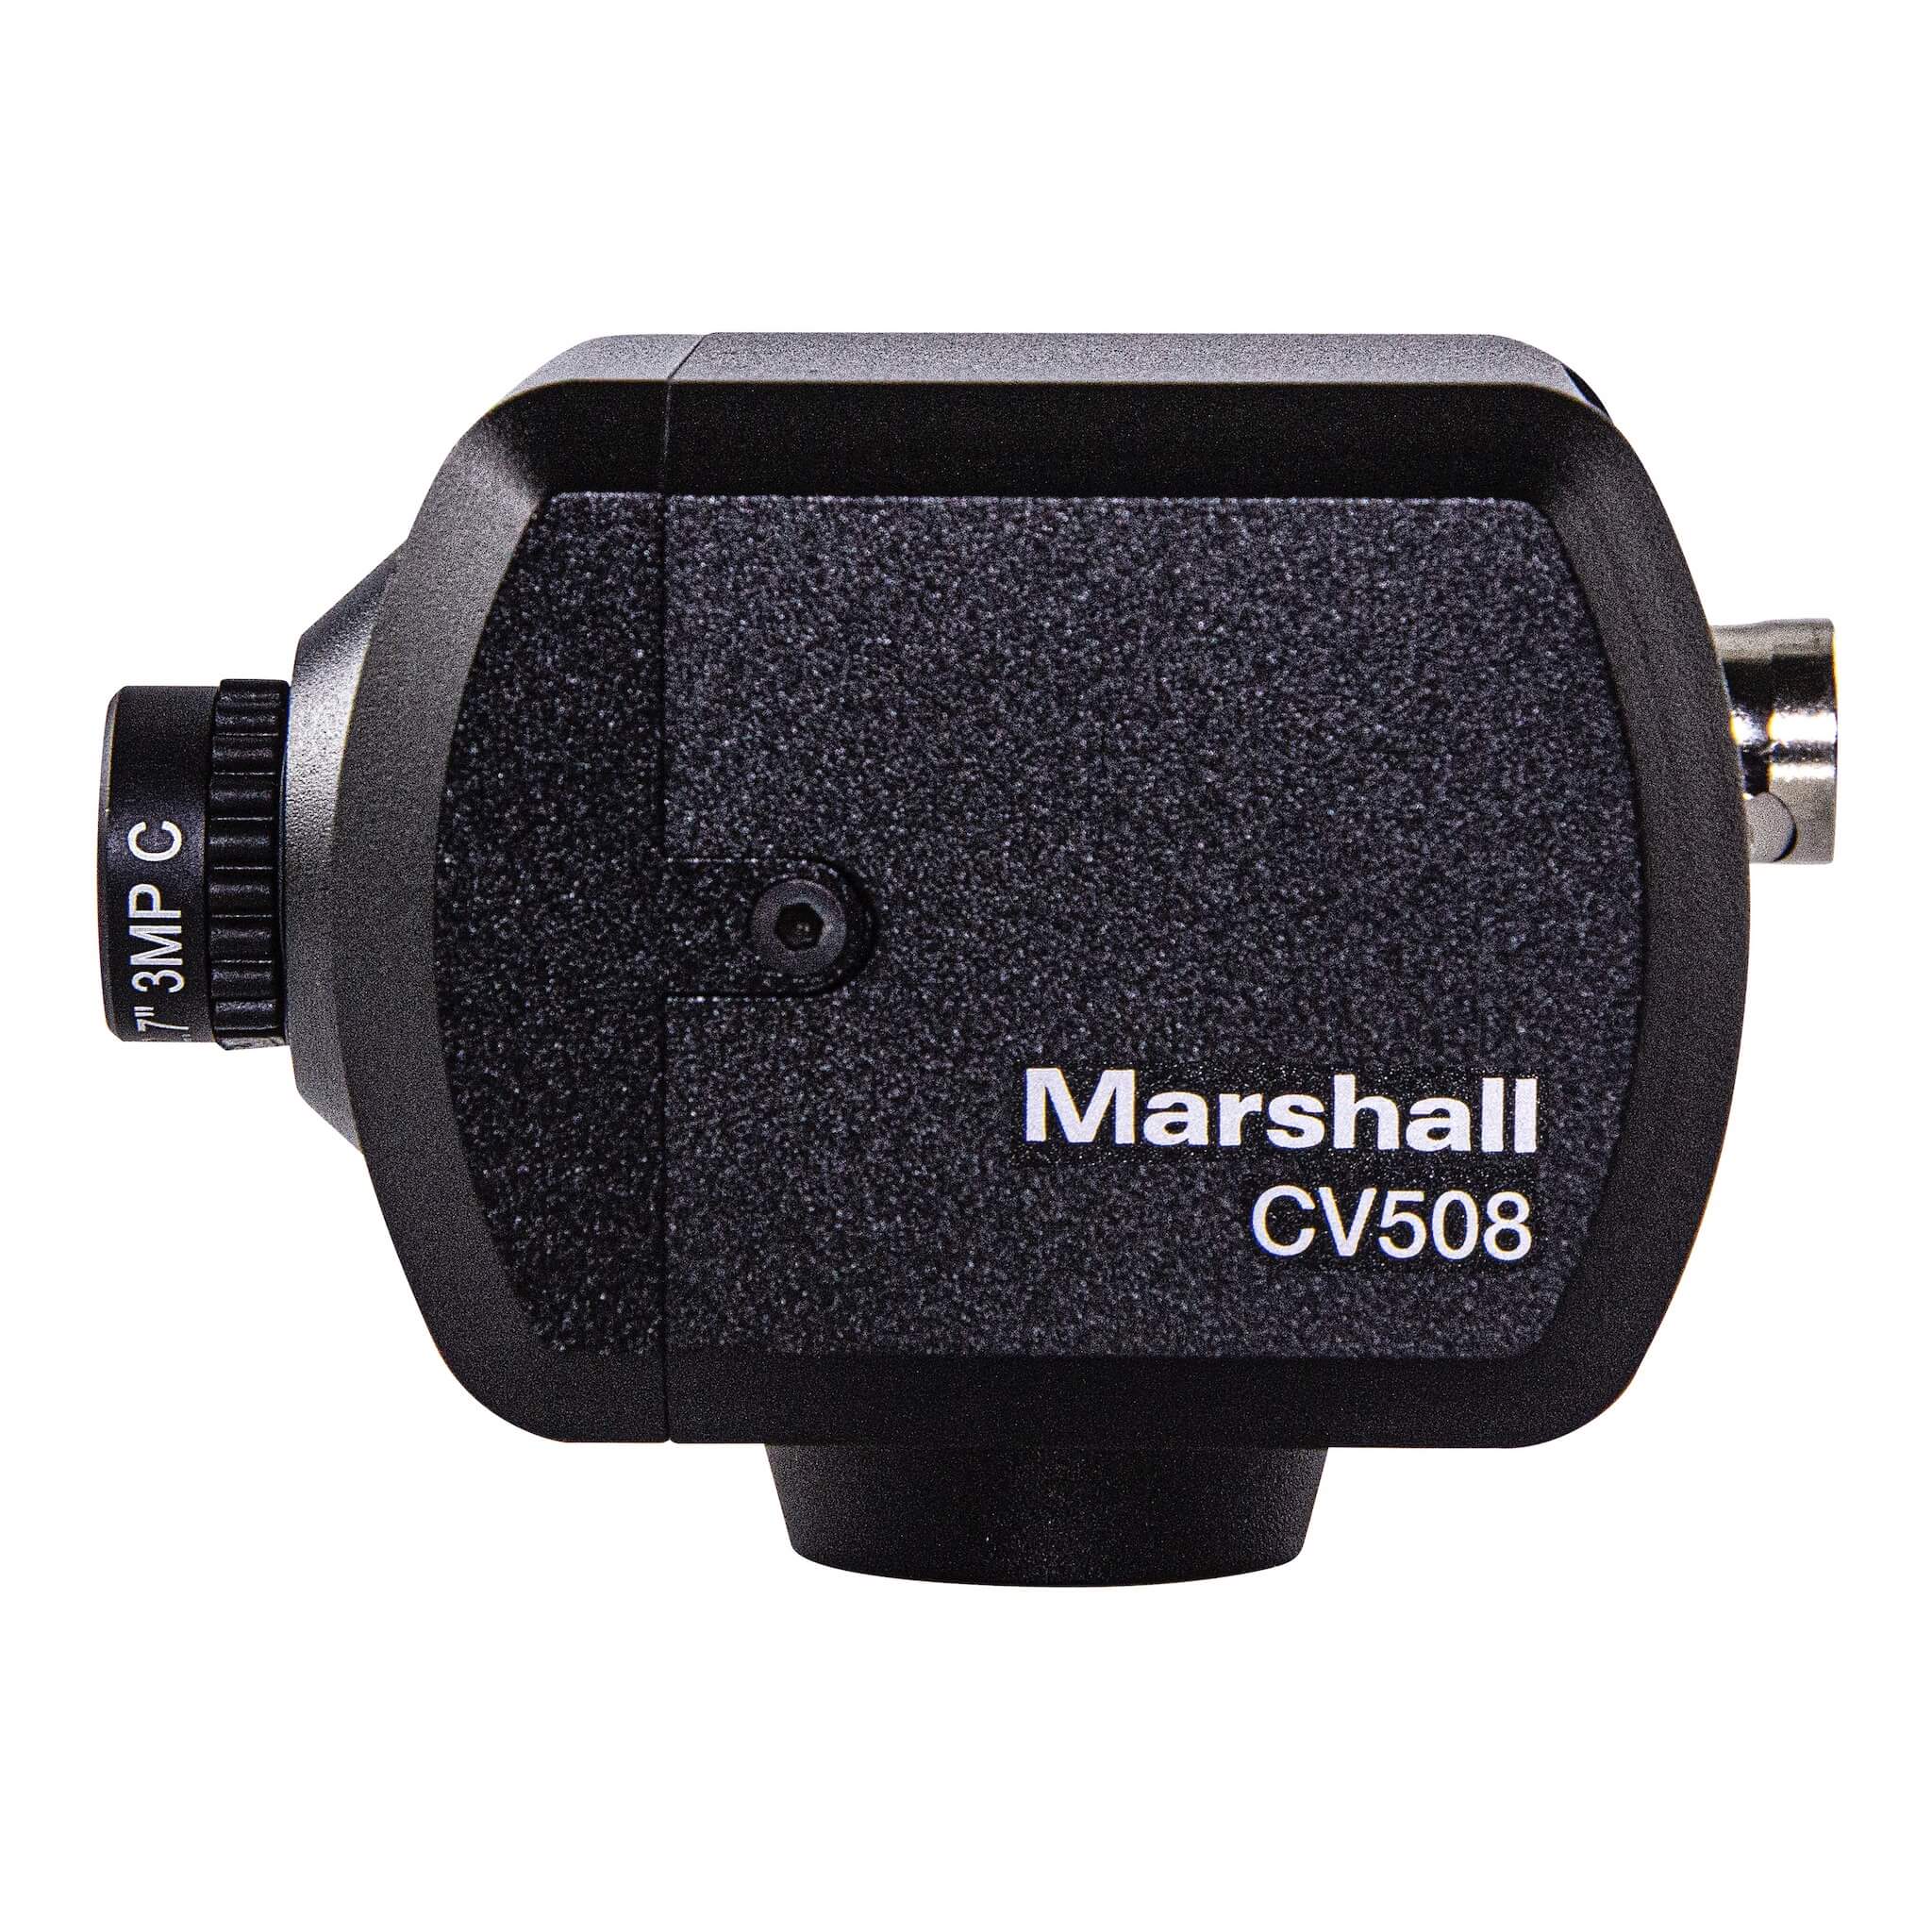 Marshall CV508 - Micro Full-HD POV Video Camera with HDMI/3GSDI, left